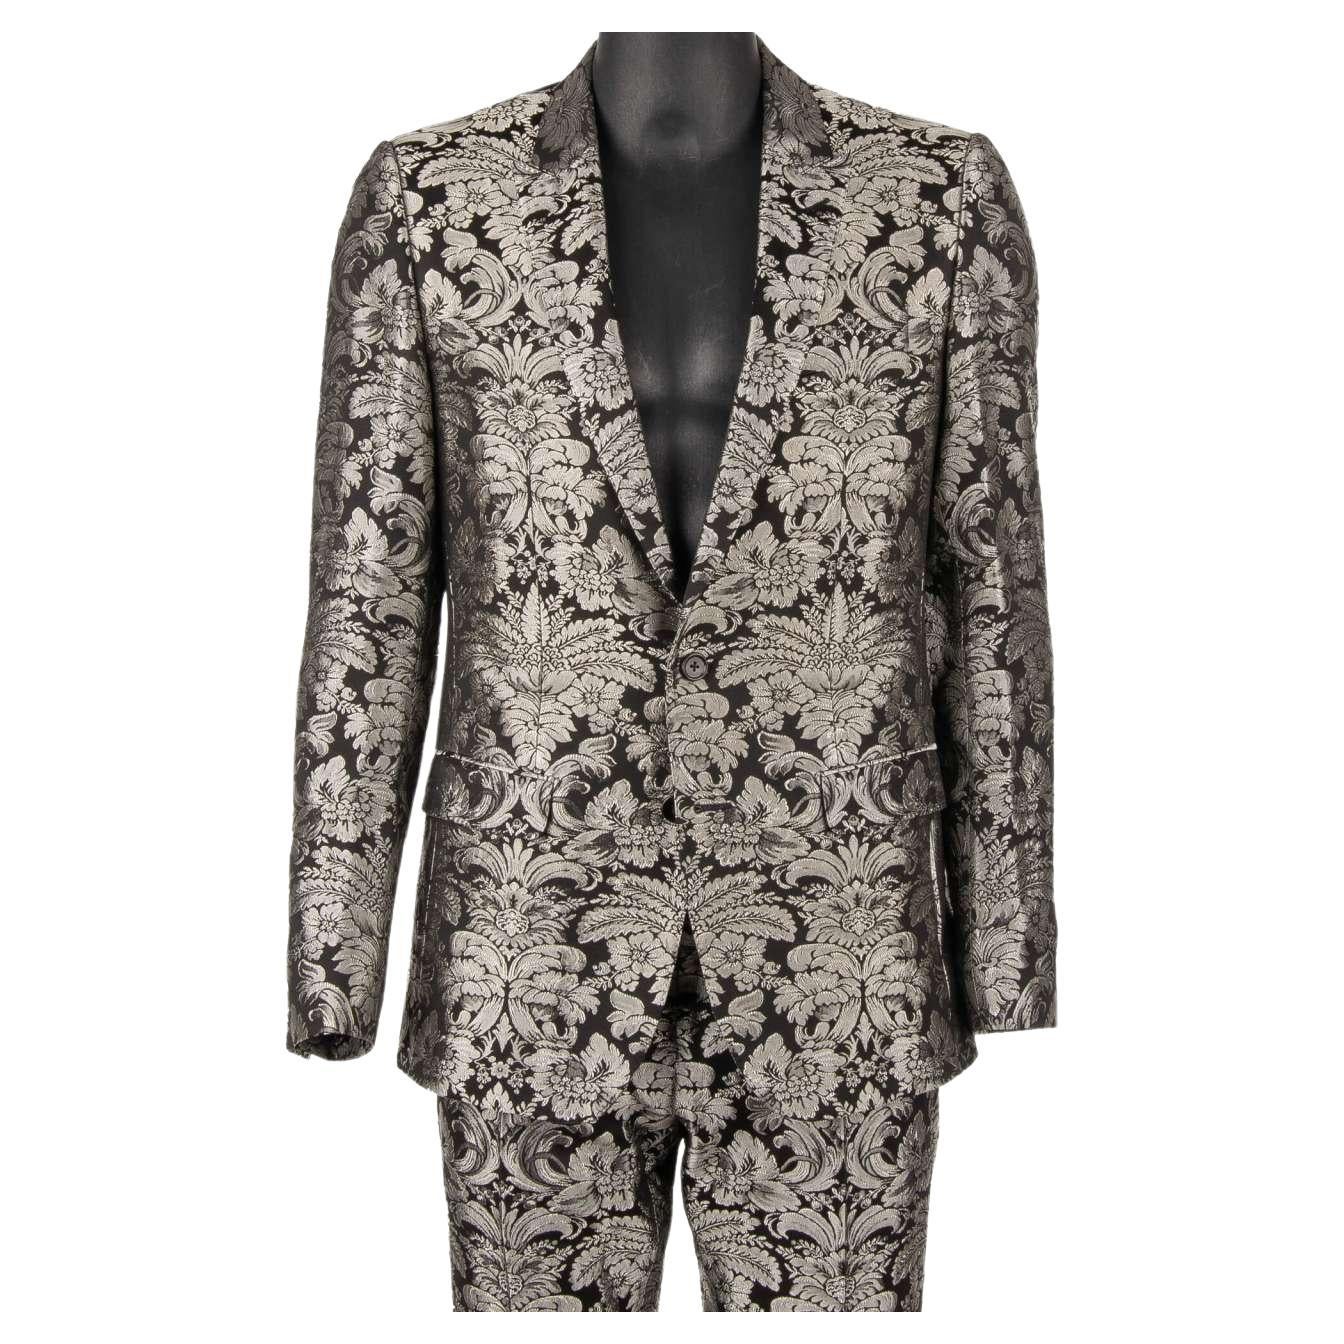 Dolce & Gabbana - Baroque Flower Jacquard Suit MARTINI Silver Black 50 For Sale